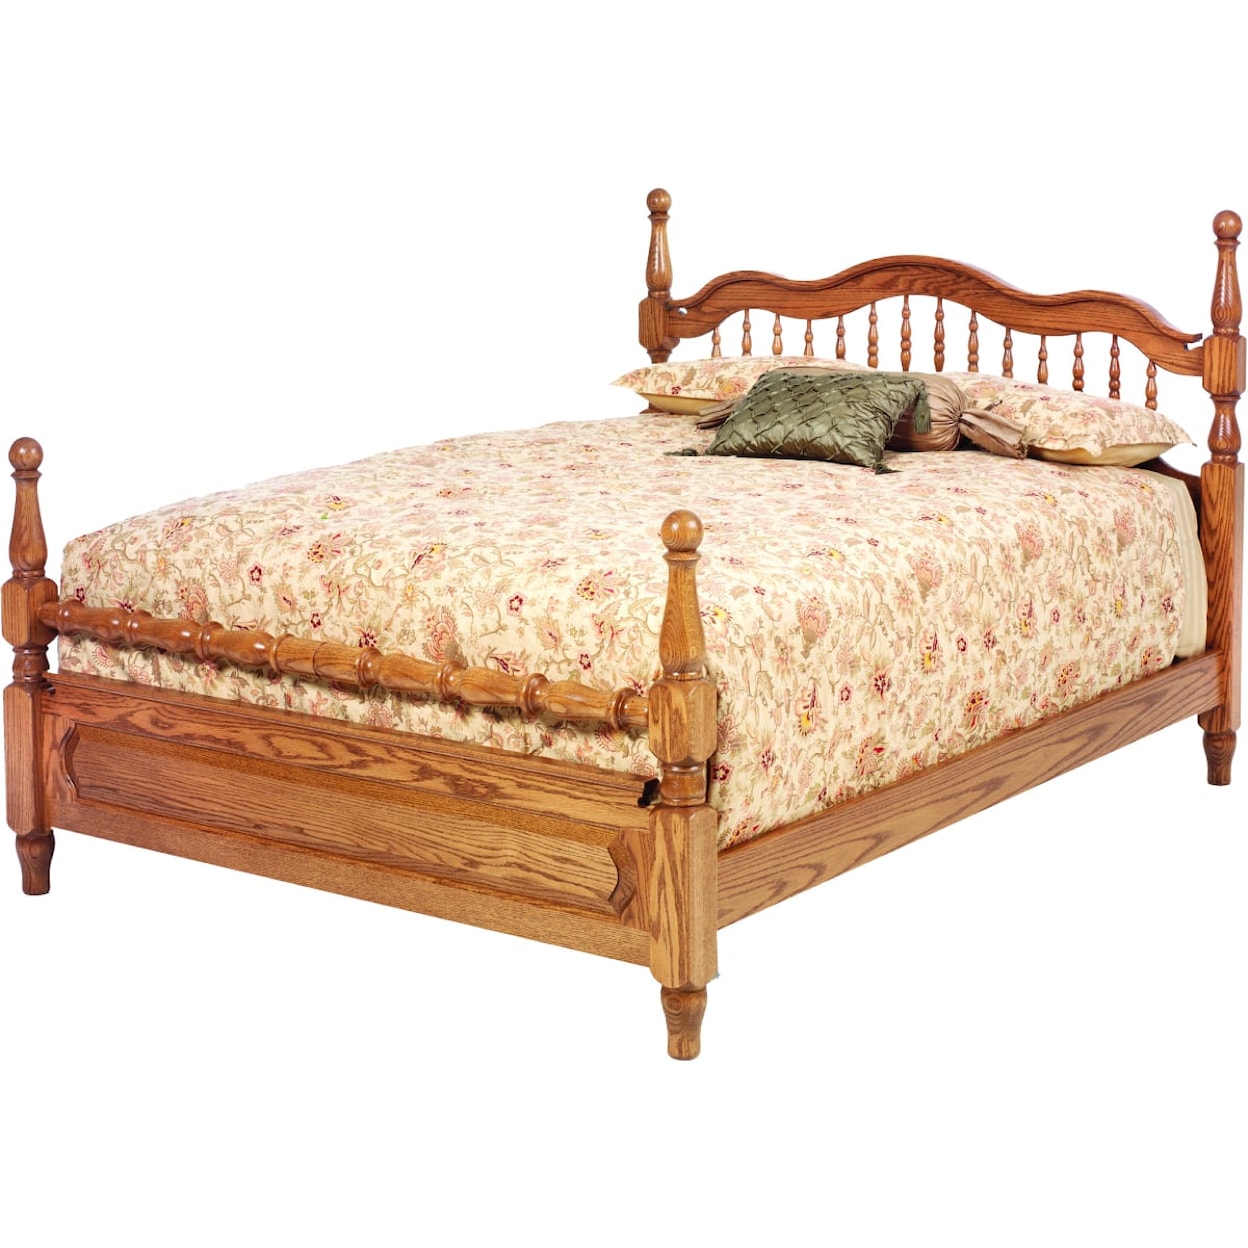 Millcraft Sierra Classic Queen Sierra Crest Bed